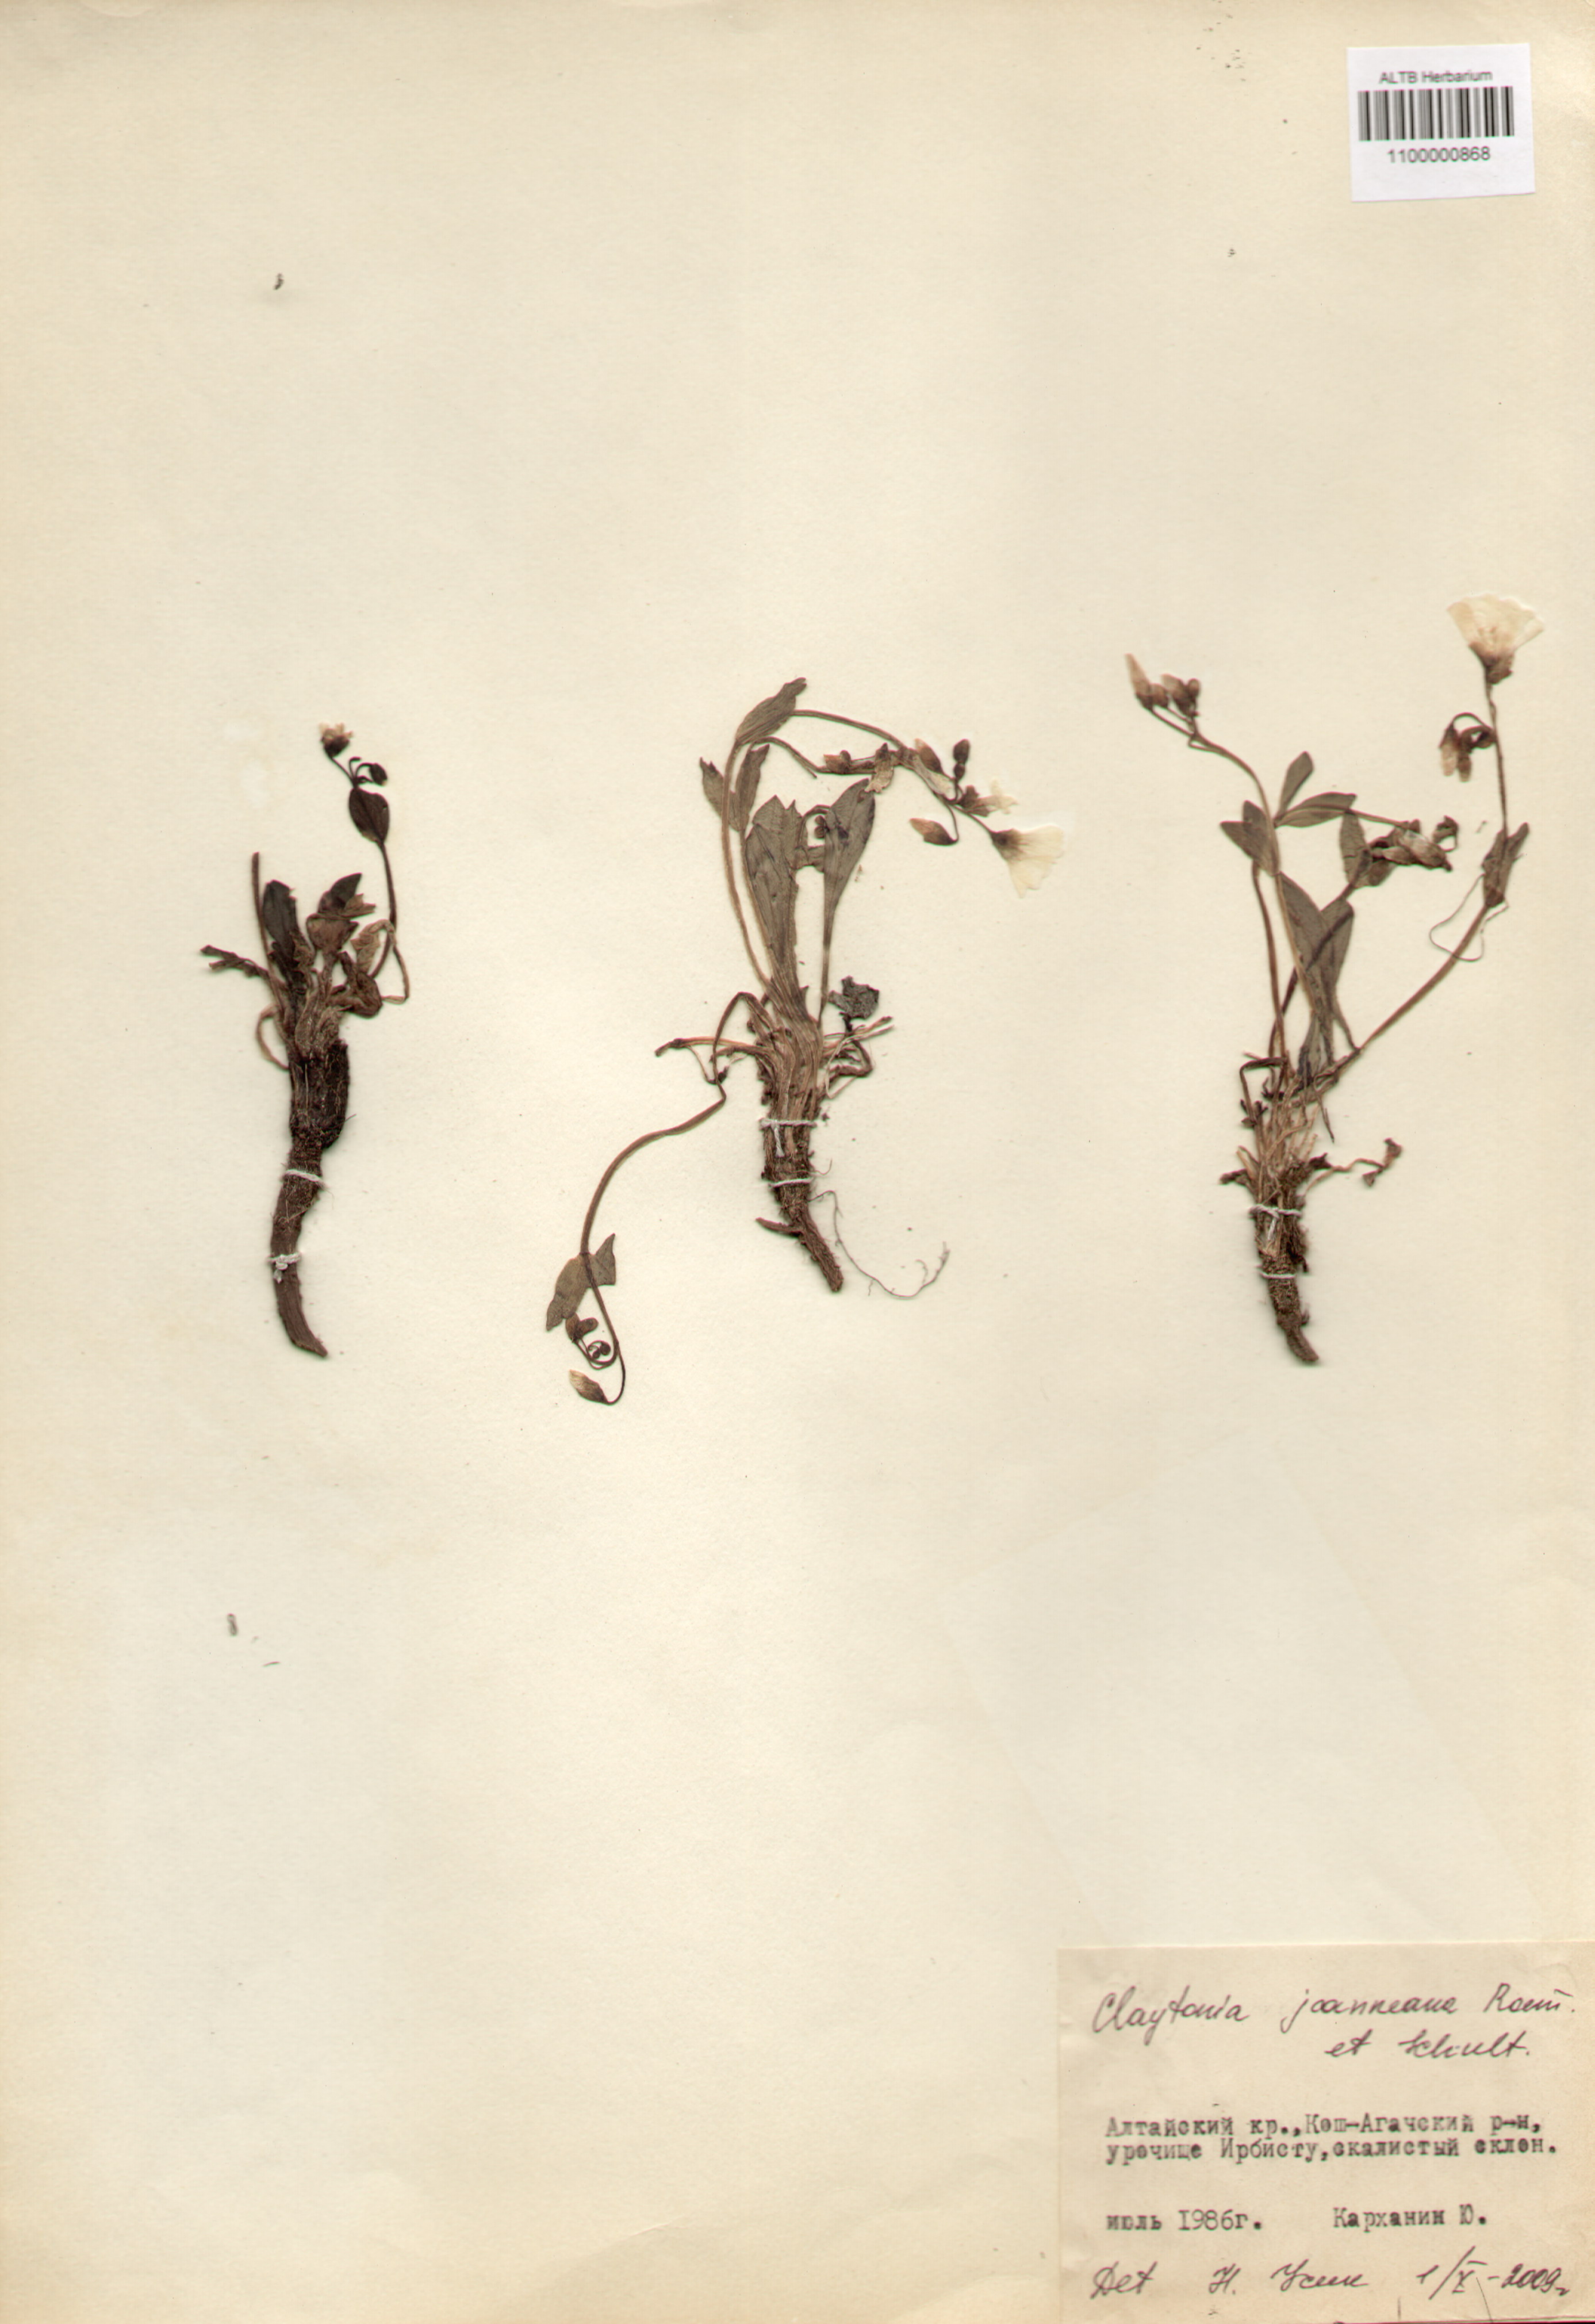 Portulacaceae,Claytonia joanneana Roem. et Schult.